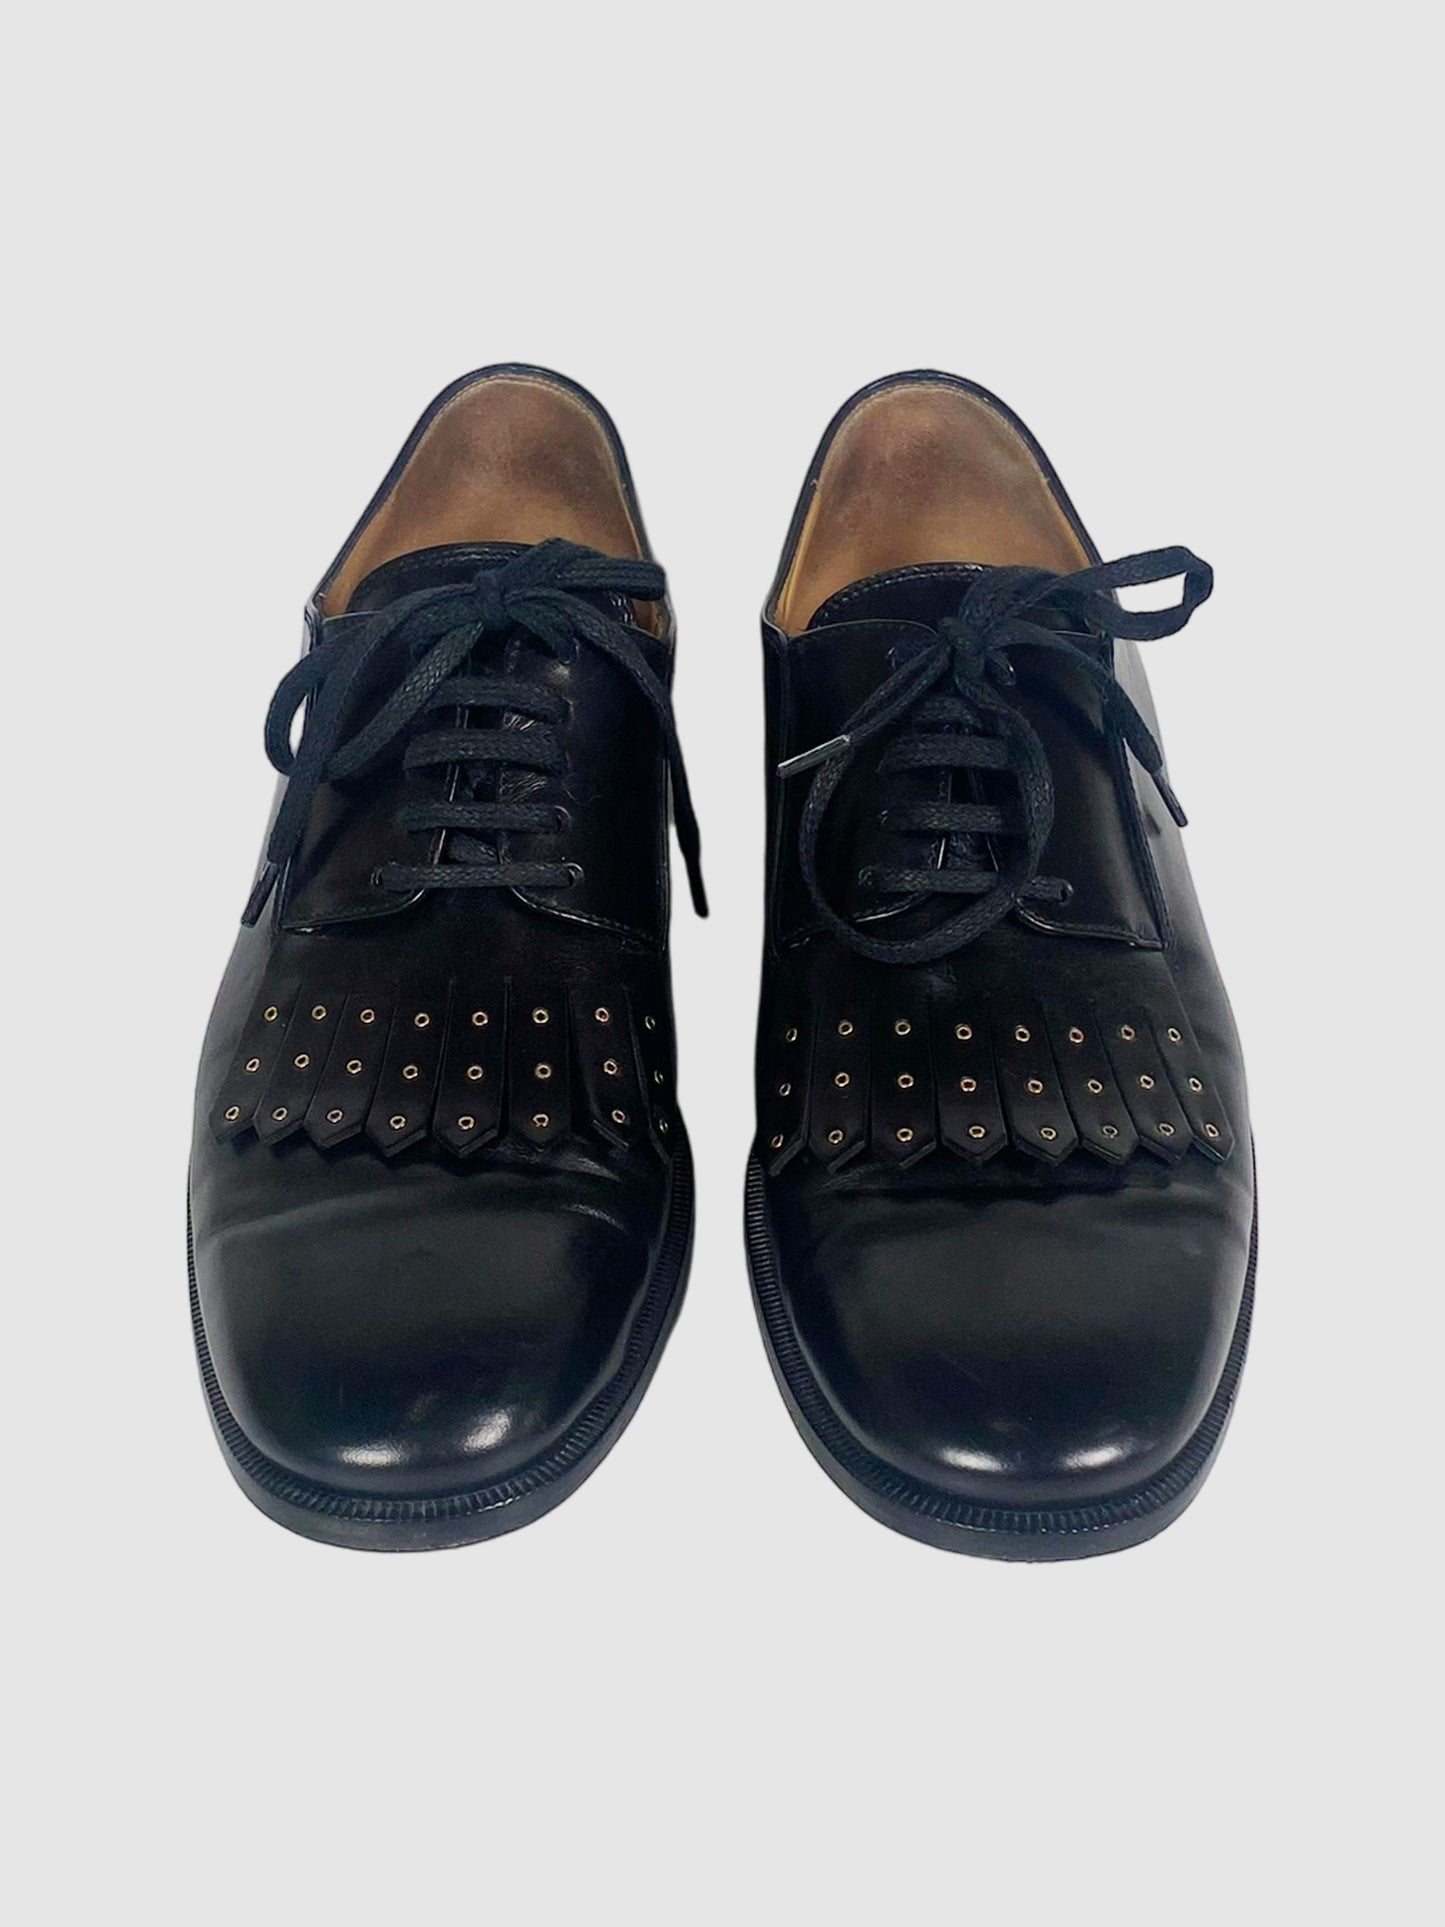 Salvatore Ferragamo Lace-Up Leather Oxfords - Size 6.5